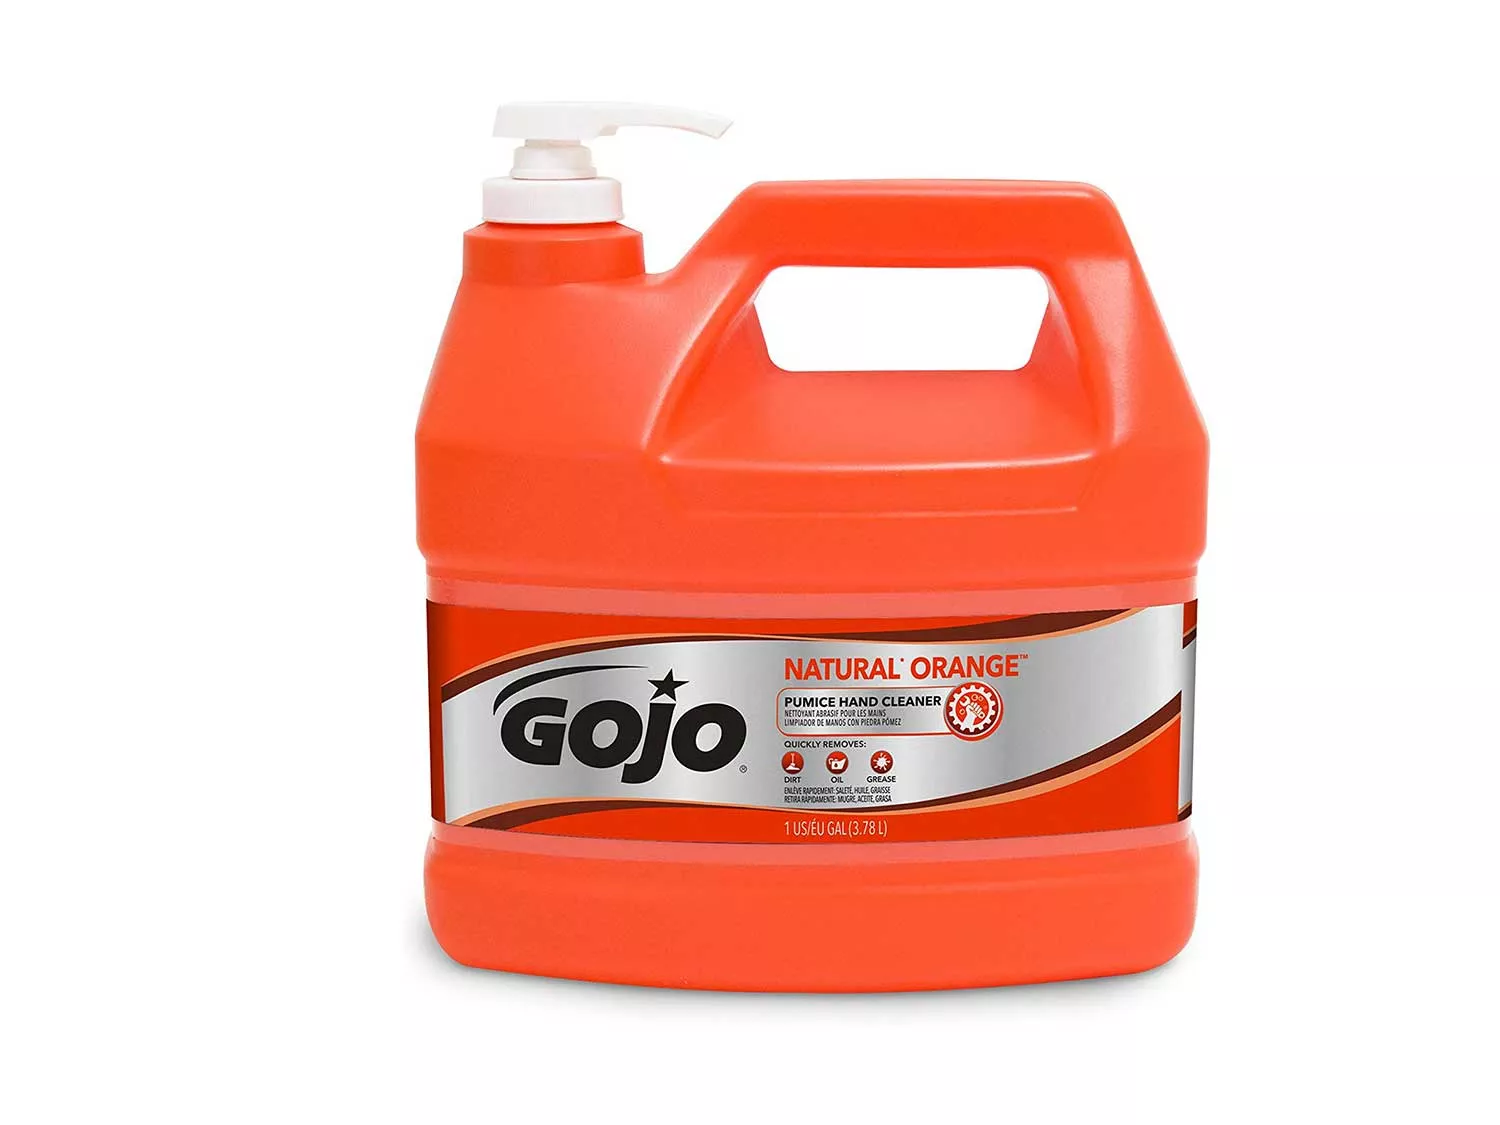 https://hotbike.com/wp-content/uploads/2020/03/1-gojo-natural-orange-pumice-industrial-cleaner.jpg